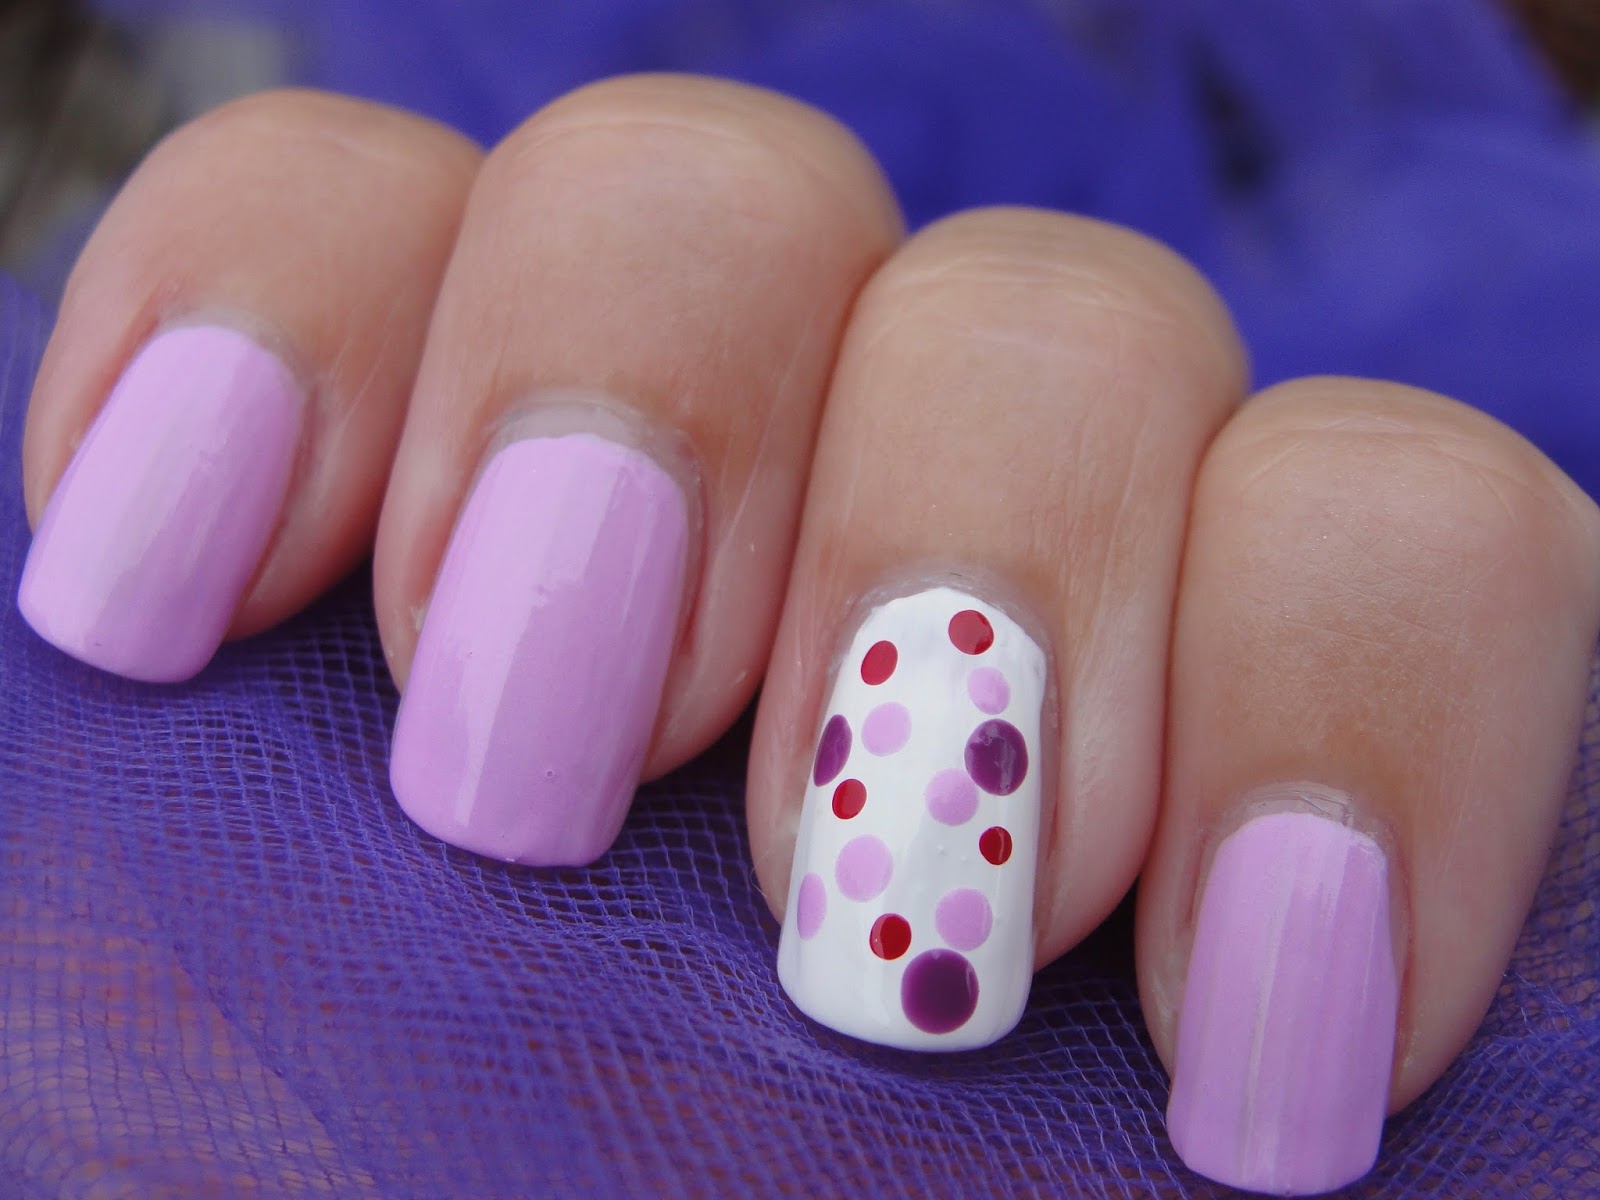 3. Adorable Purple Polka Dot Nails - wide 1